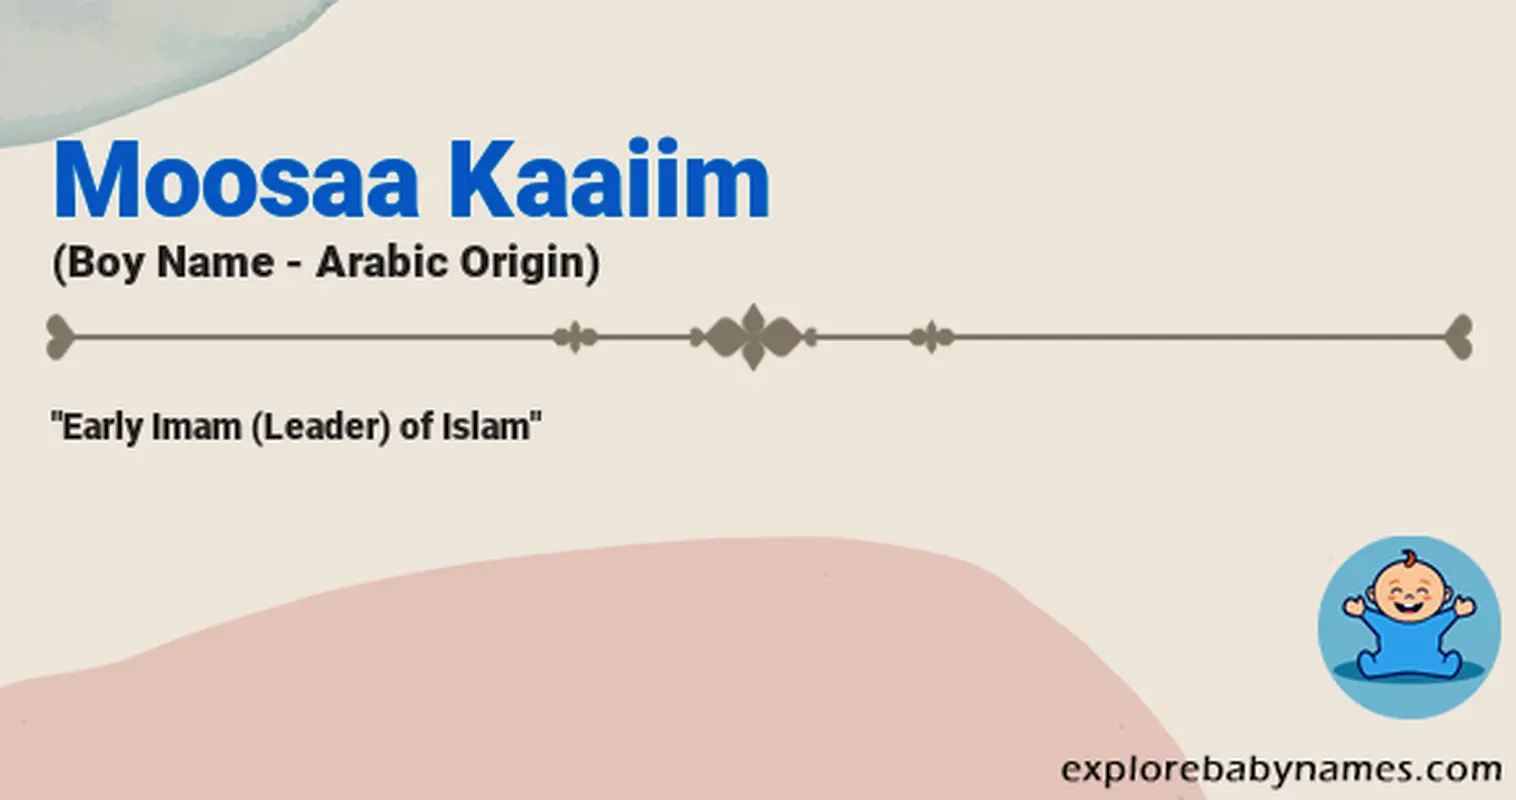 Meaning of Moosaa Kaaiim